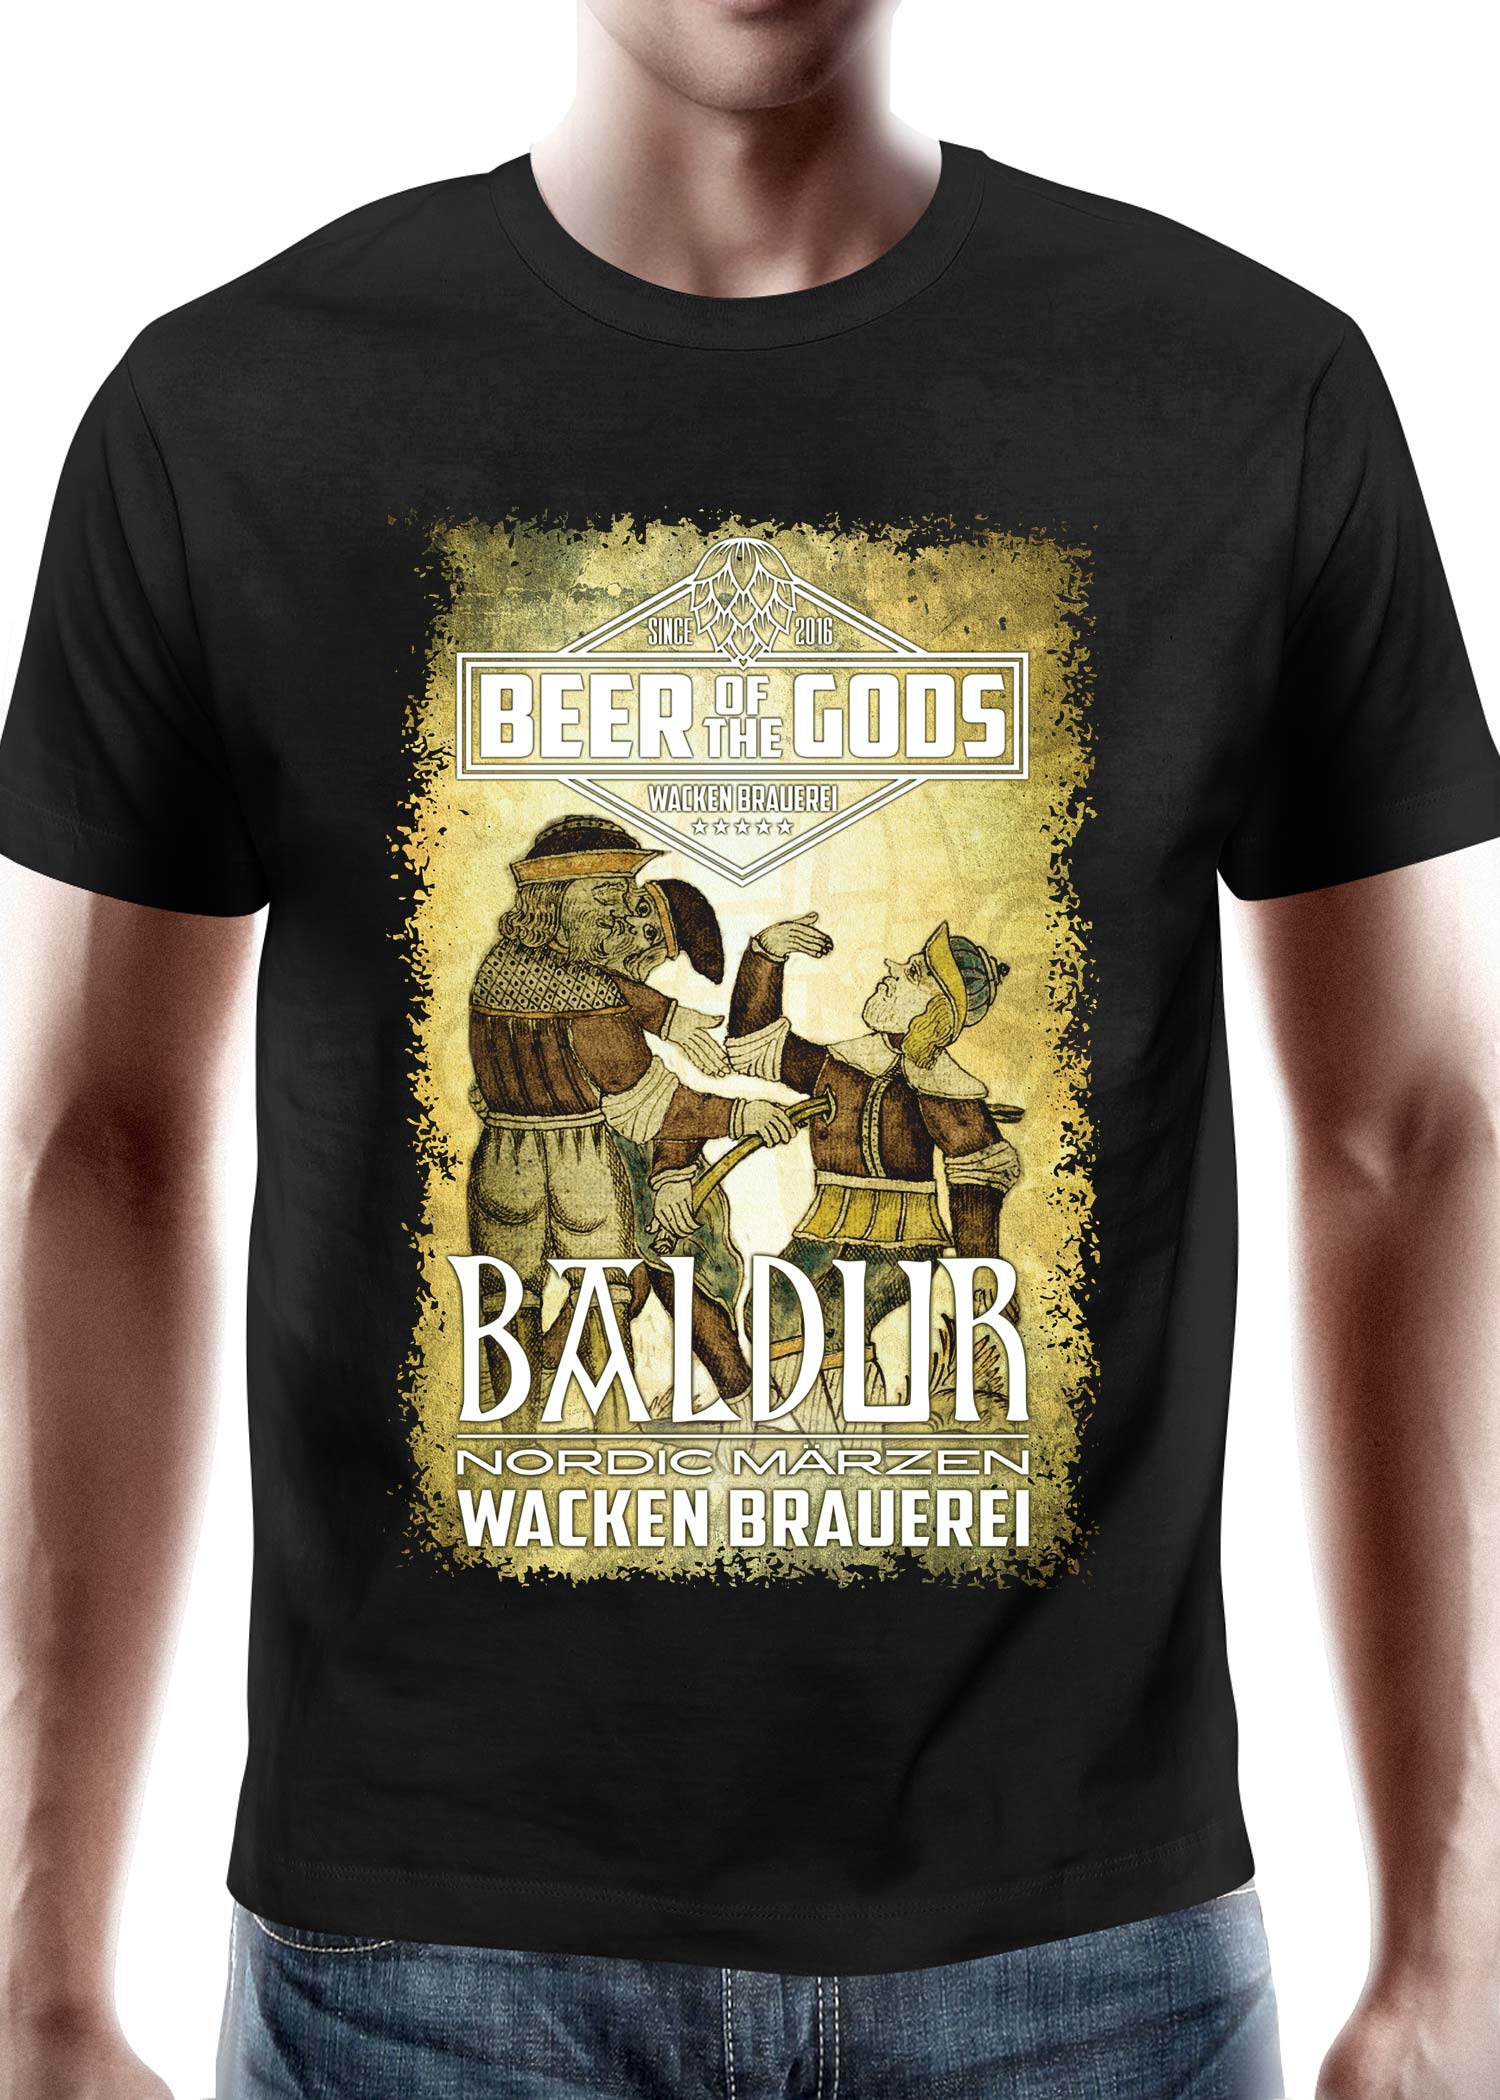 Baldur - Wacken Brauerei, T-Shirt, Größe XXL